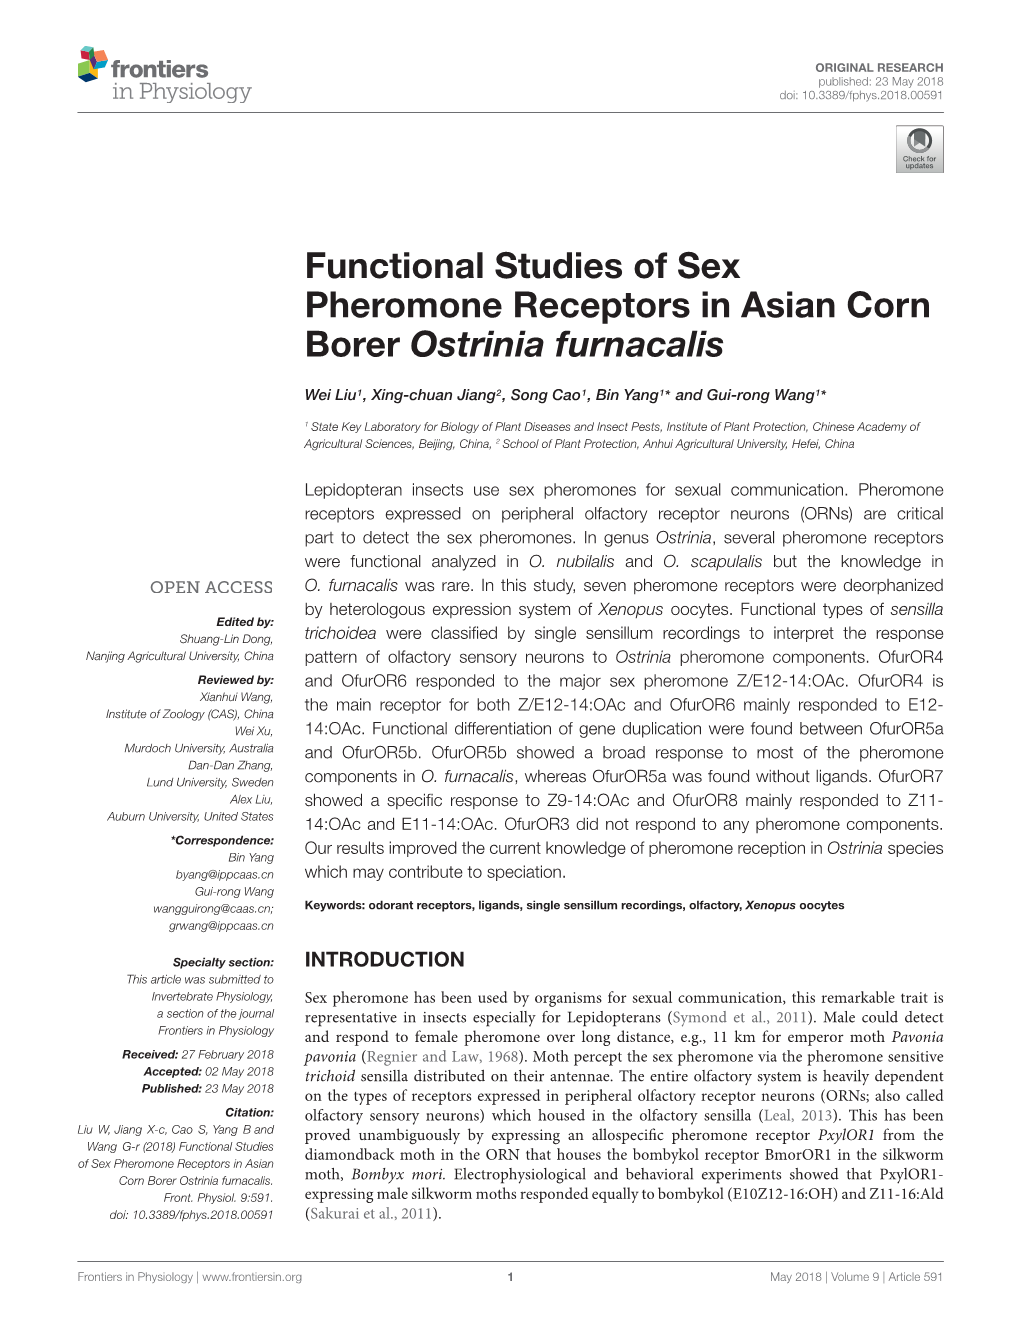 Functional Studies of Sex Pheromone Receptors in Asian Corn Borer Ostrinia Furnacalis